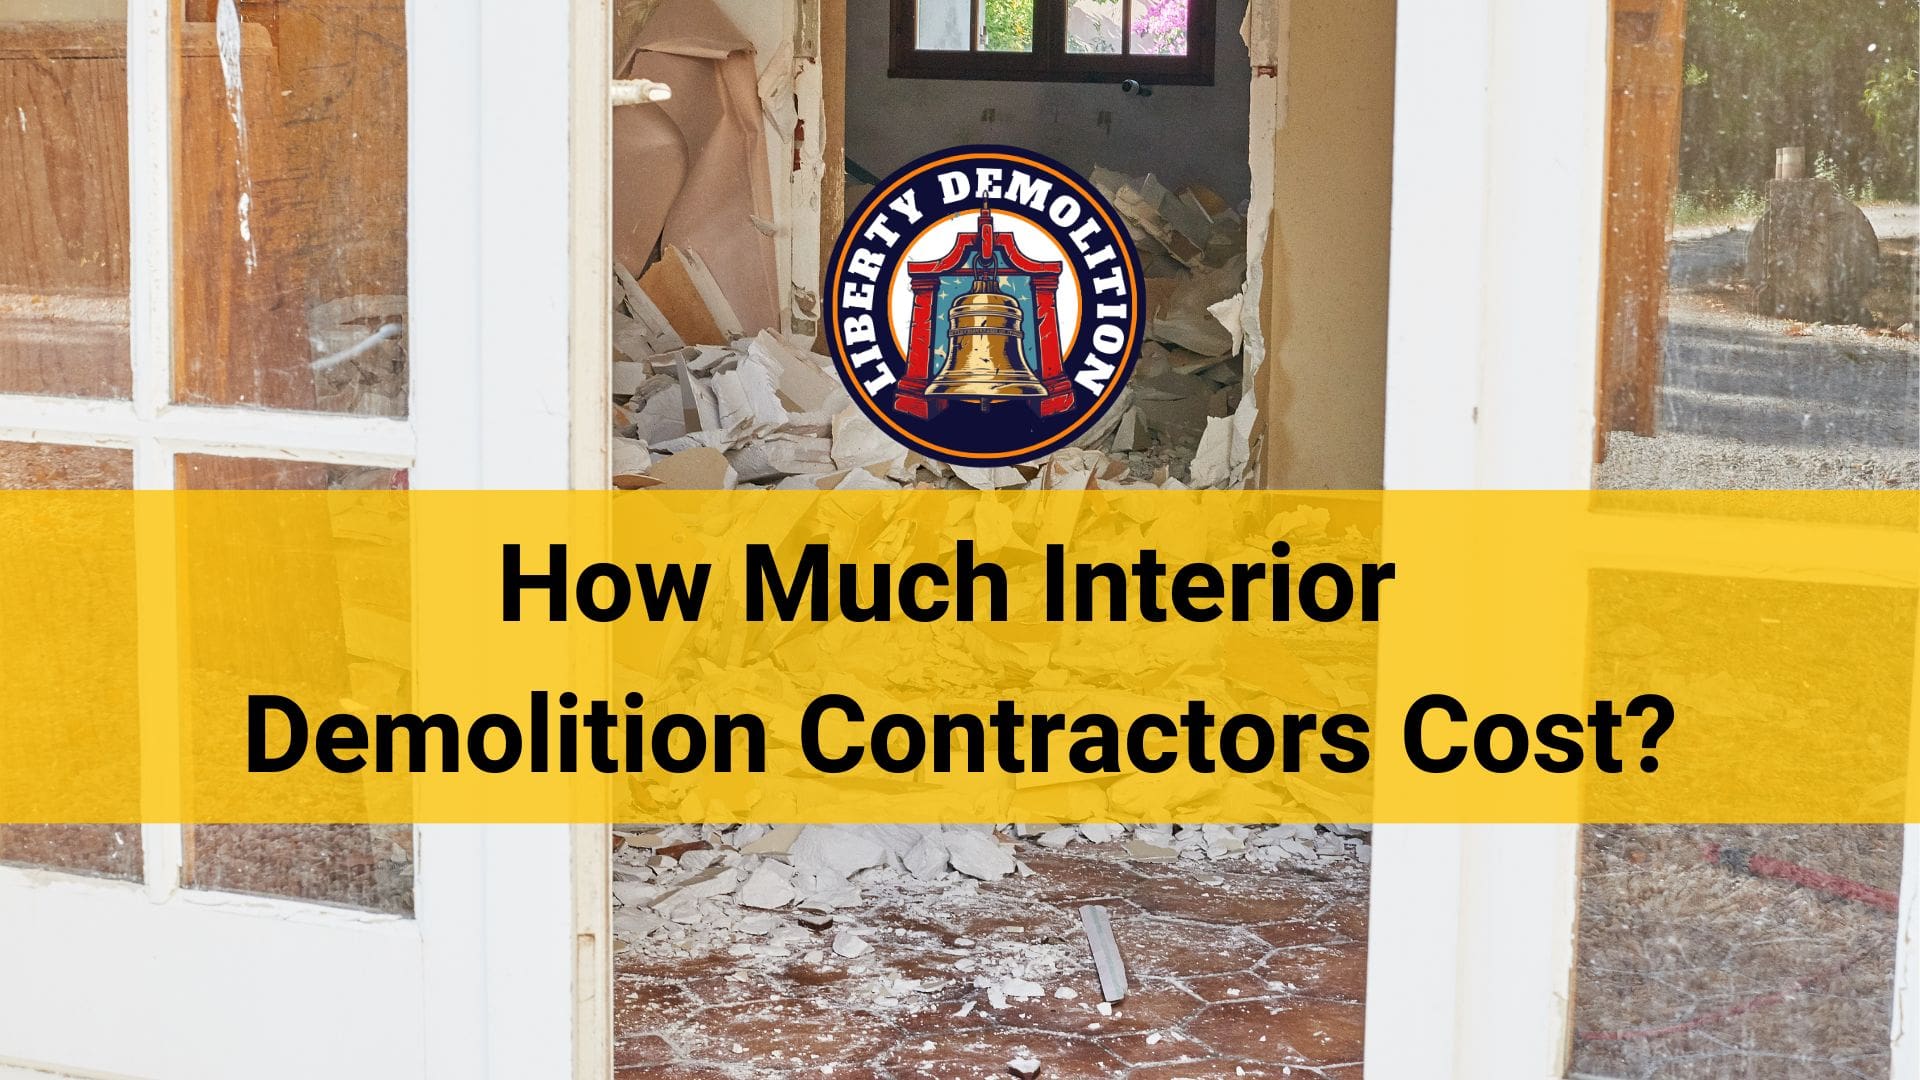 How Much Interior Demolition Contractors Cost